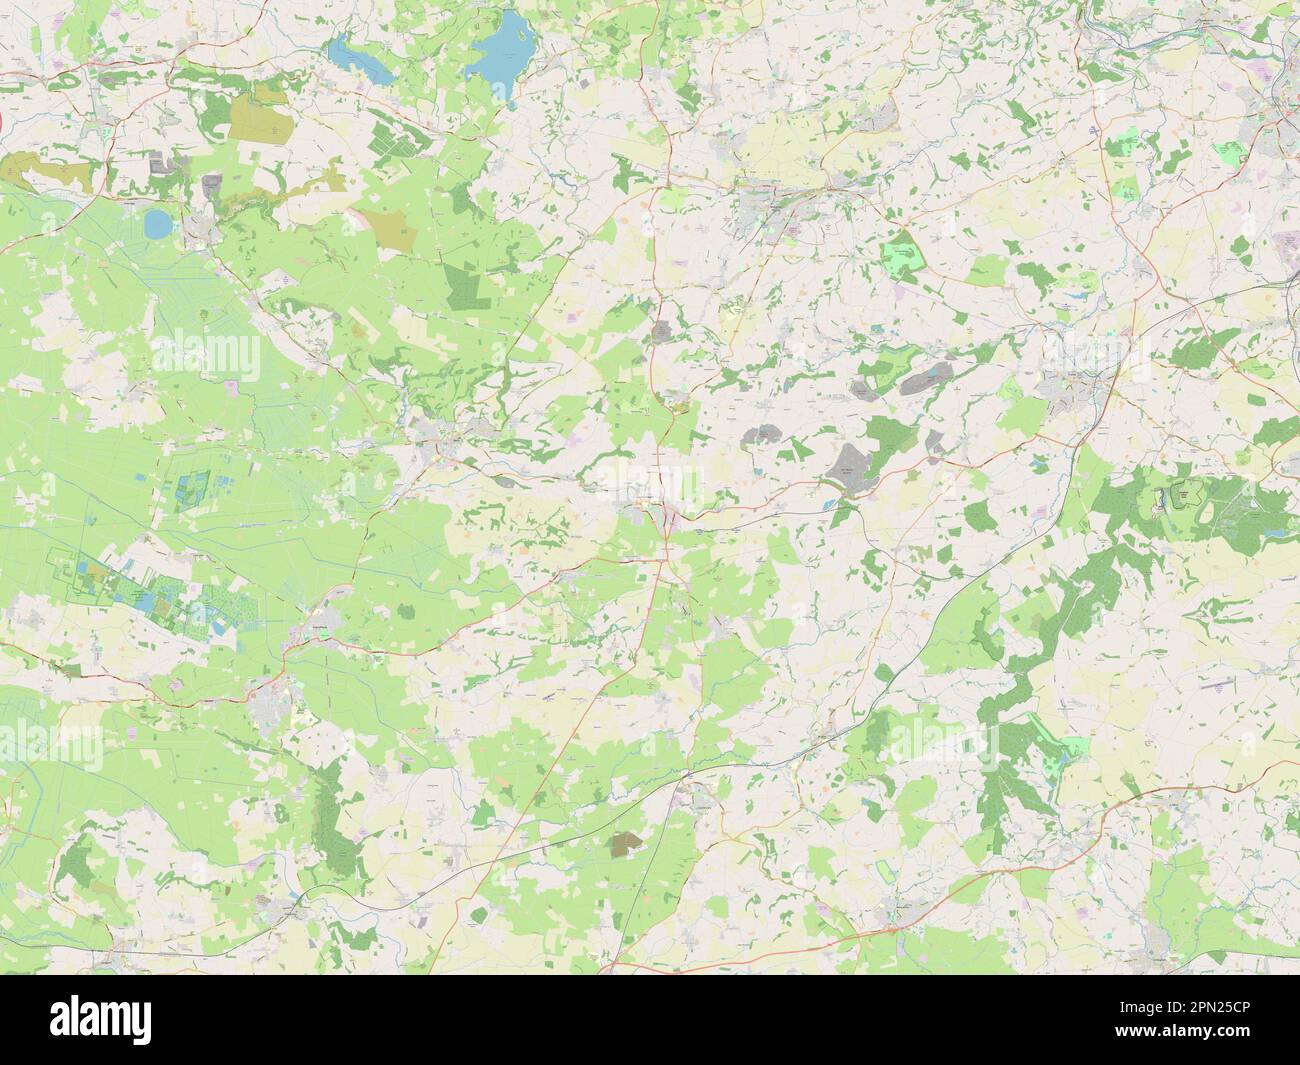 Mendip, non metropolitan district of England - Great Britain. Open Street Map Stock Photo